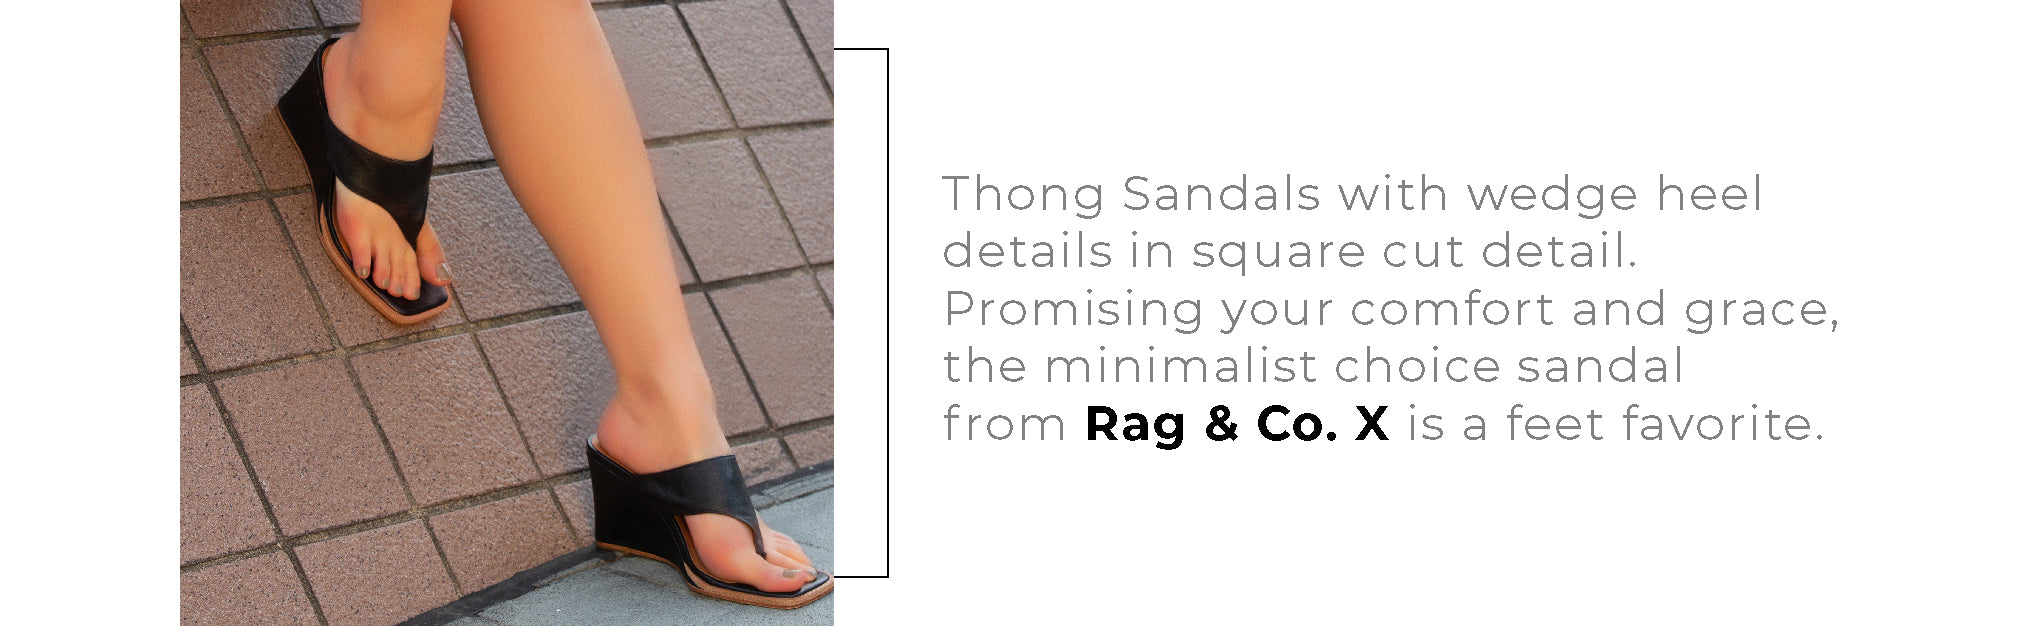 ONASSIS Tan Thong Wedge Sandals